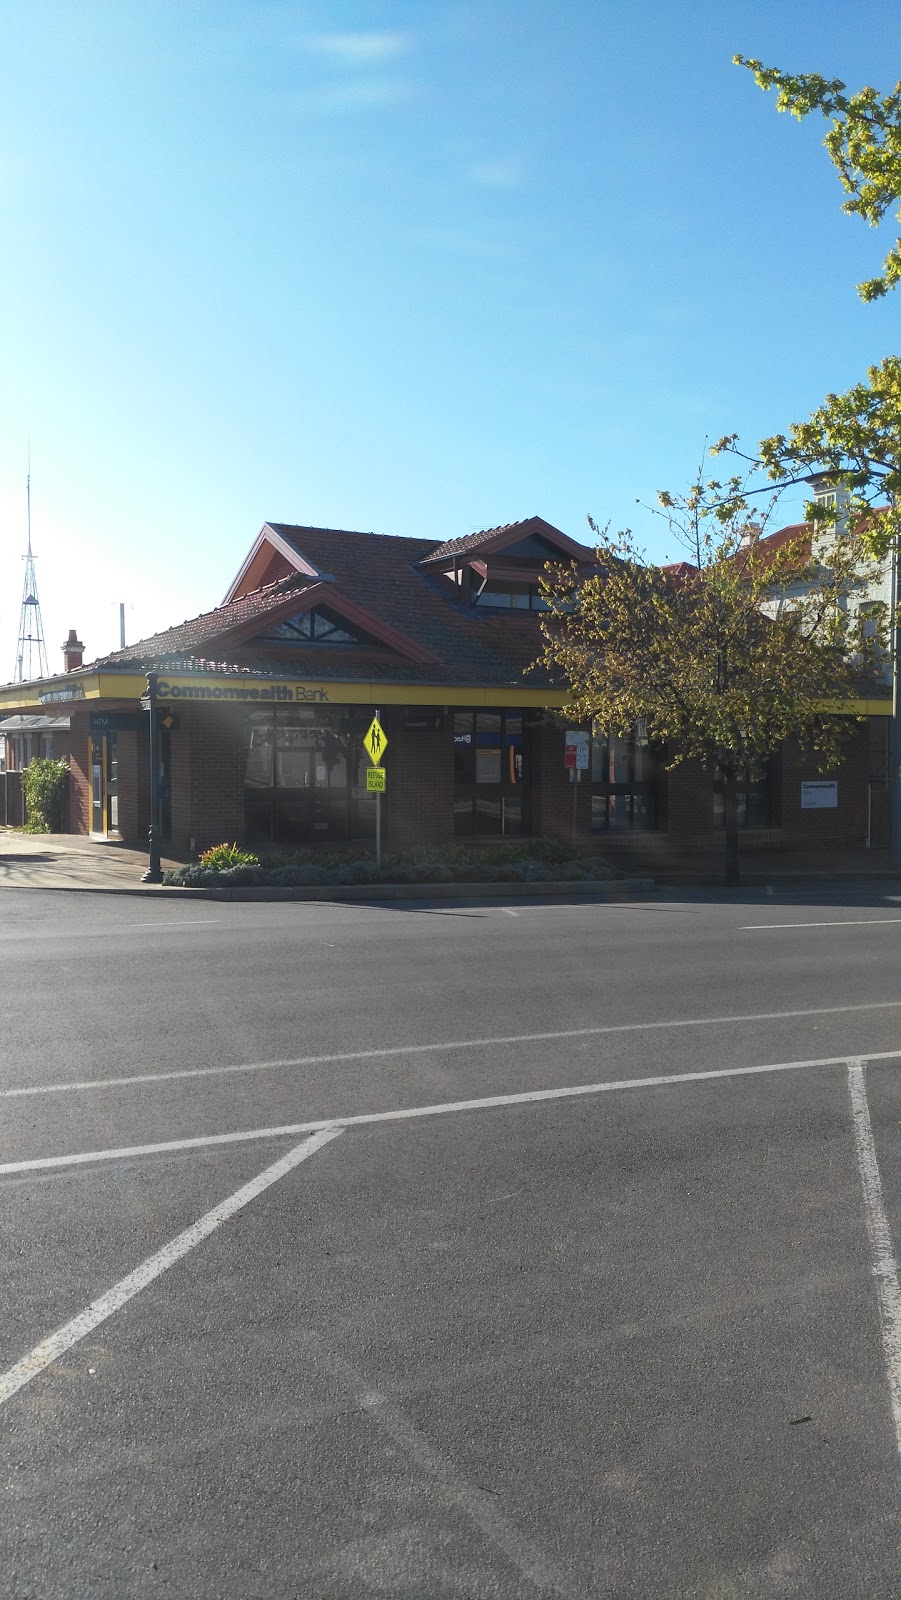 CBA Branch (Corowa) | bank | 167/171 Sanger St, Corowa NSW 2646, Australia | 132221 OR +61 132221